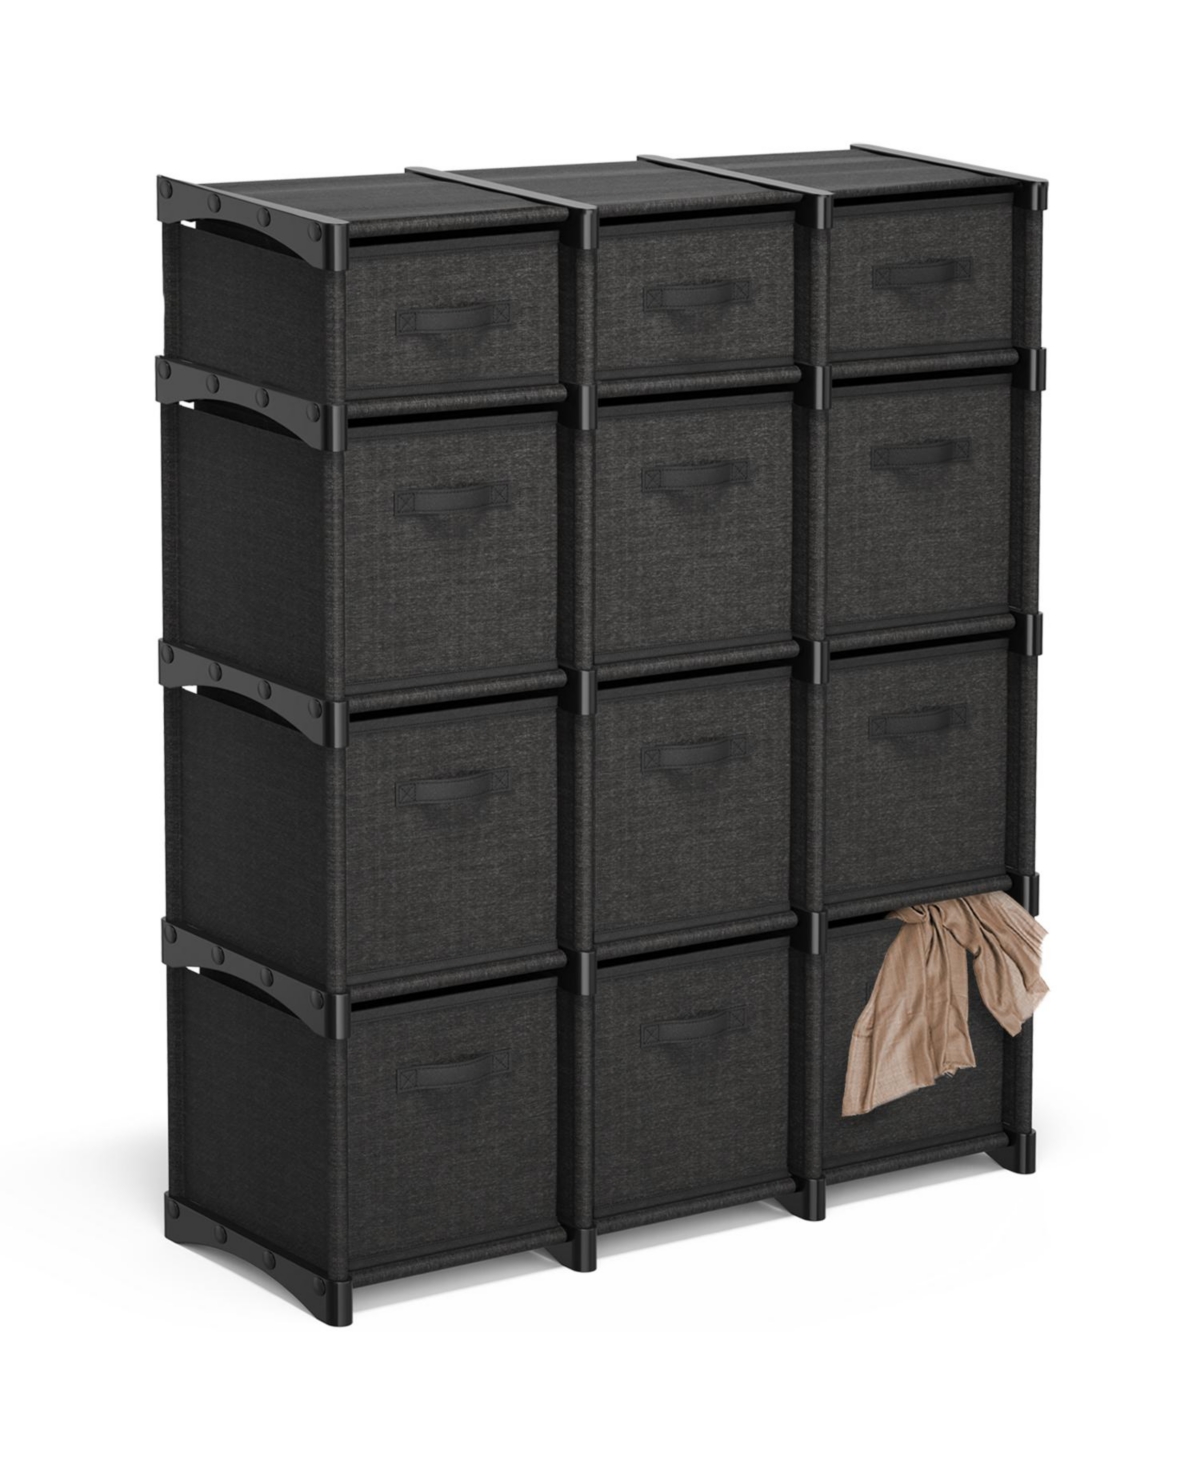 Heavy Duty 12 Cube Storage Organizer with Fabric Storage Bins - Black